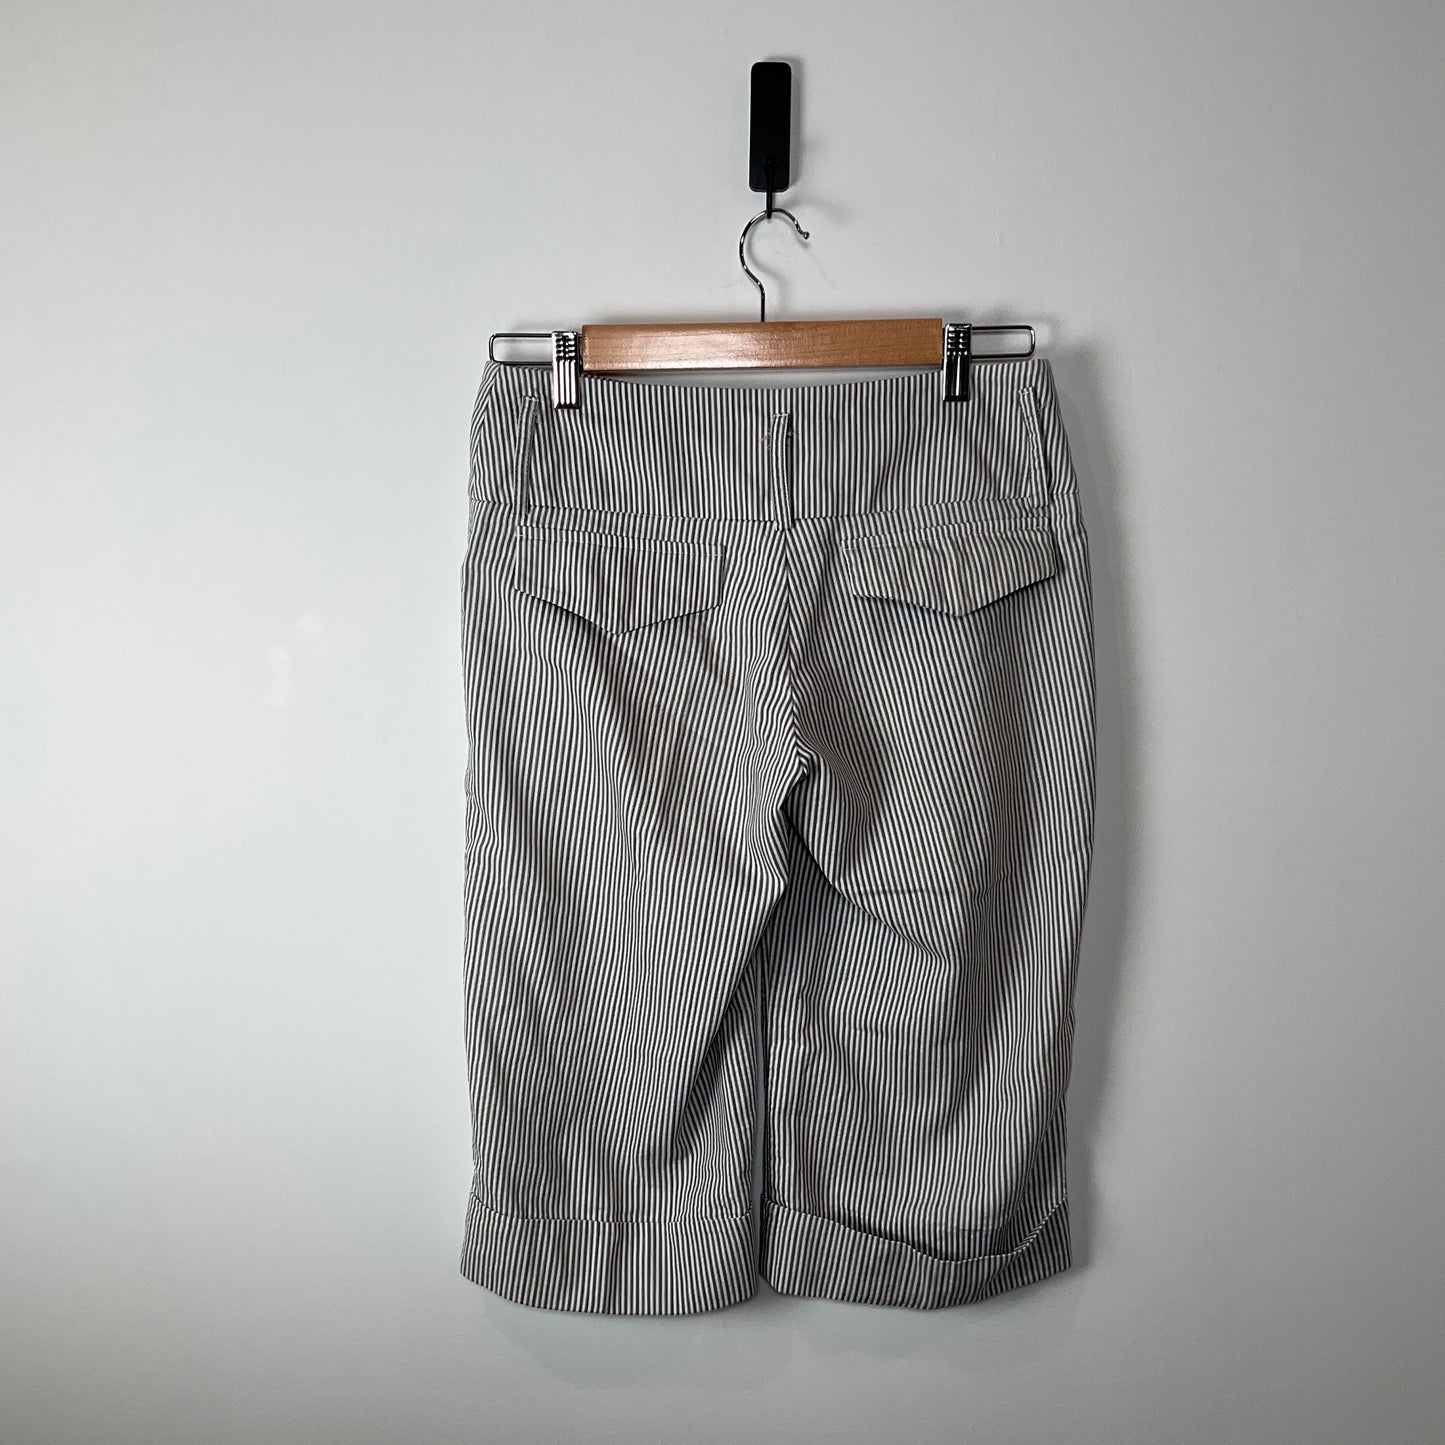 Portmans - Shorts